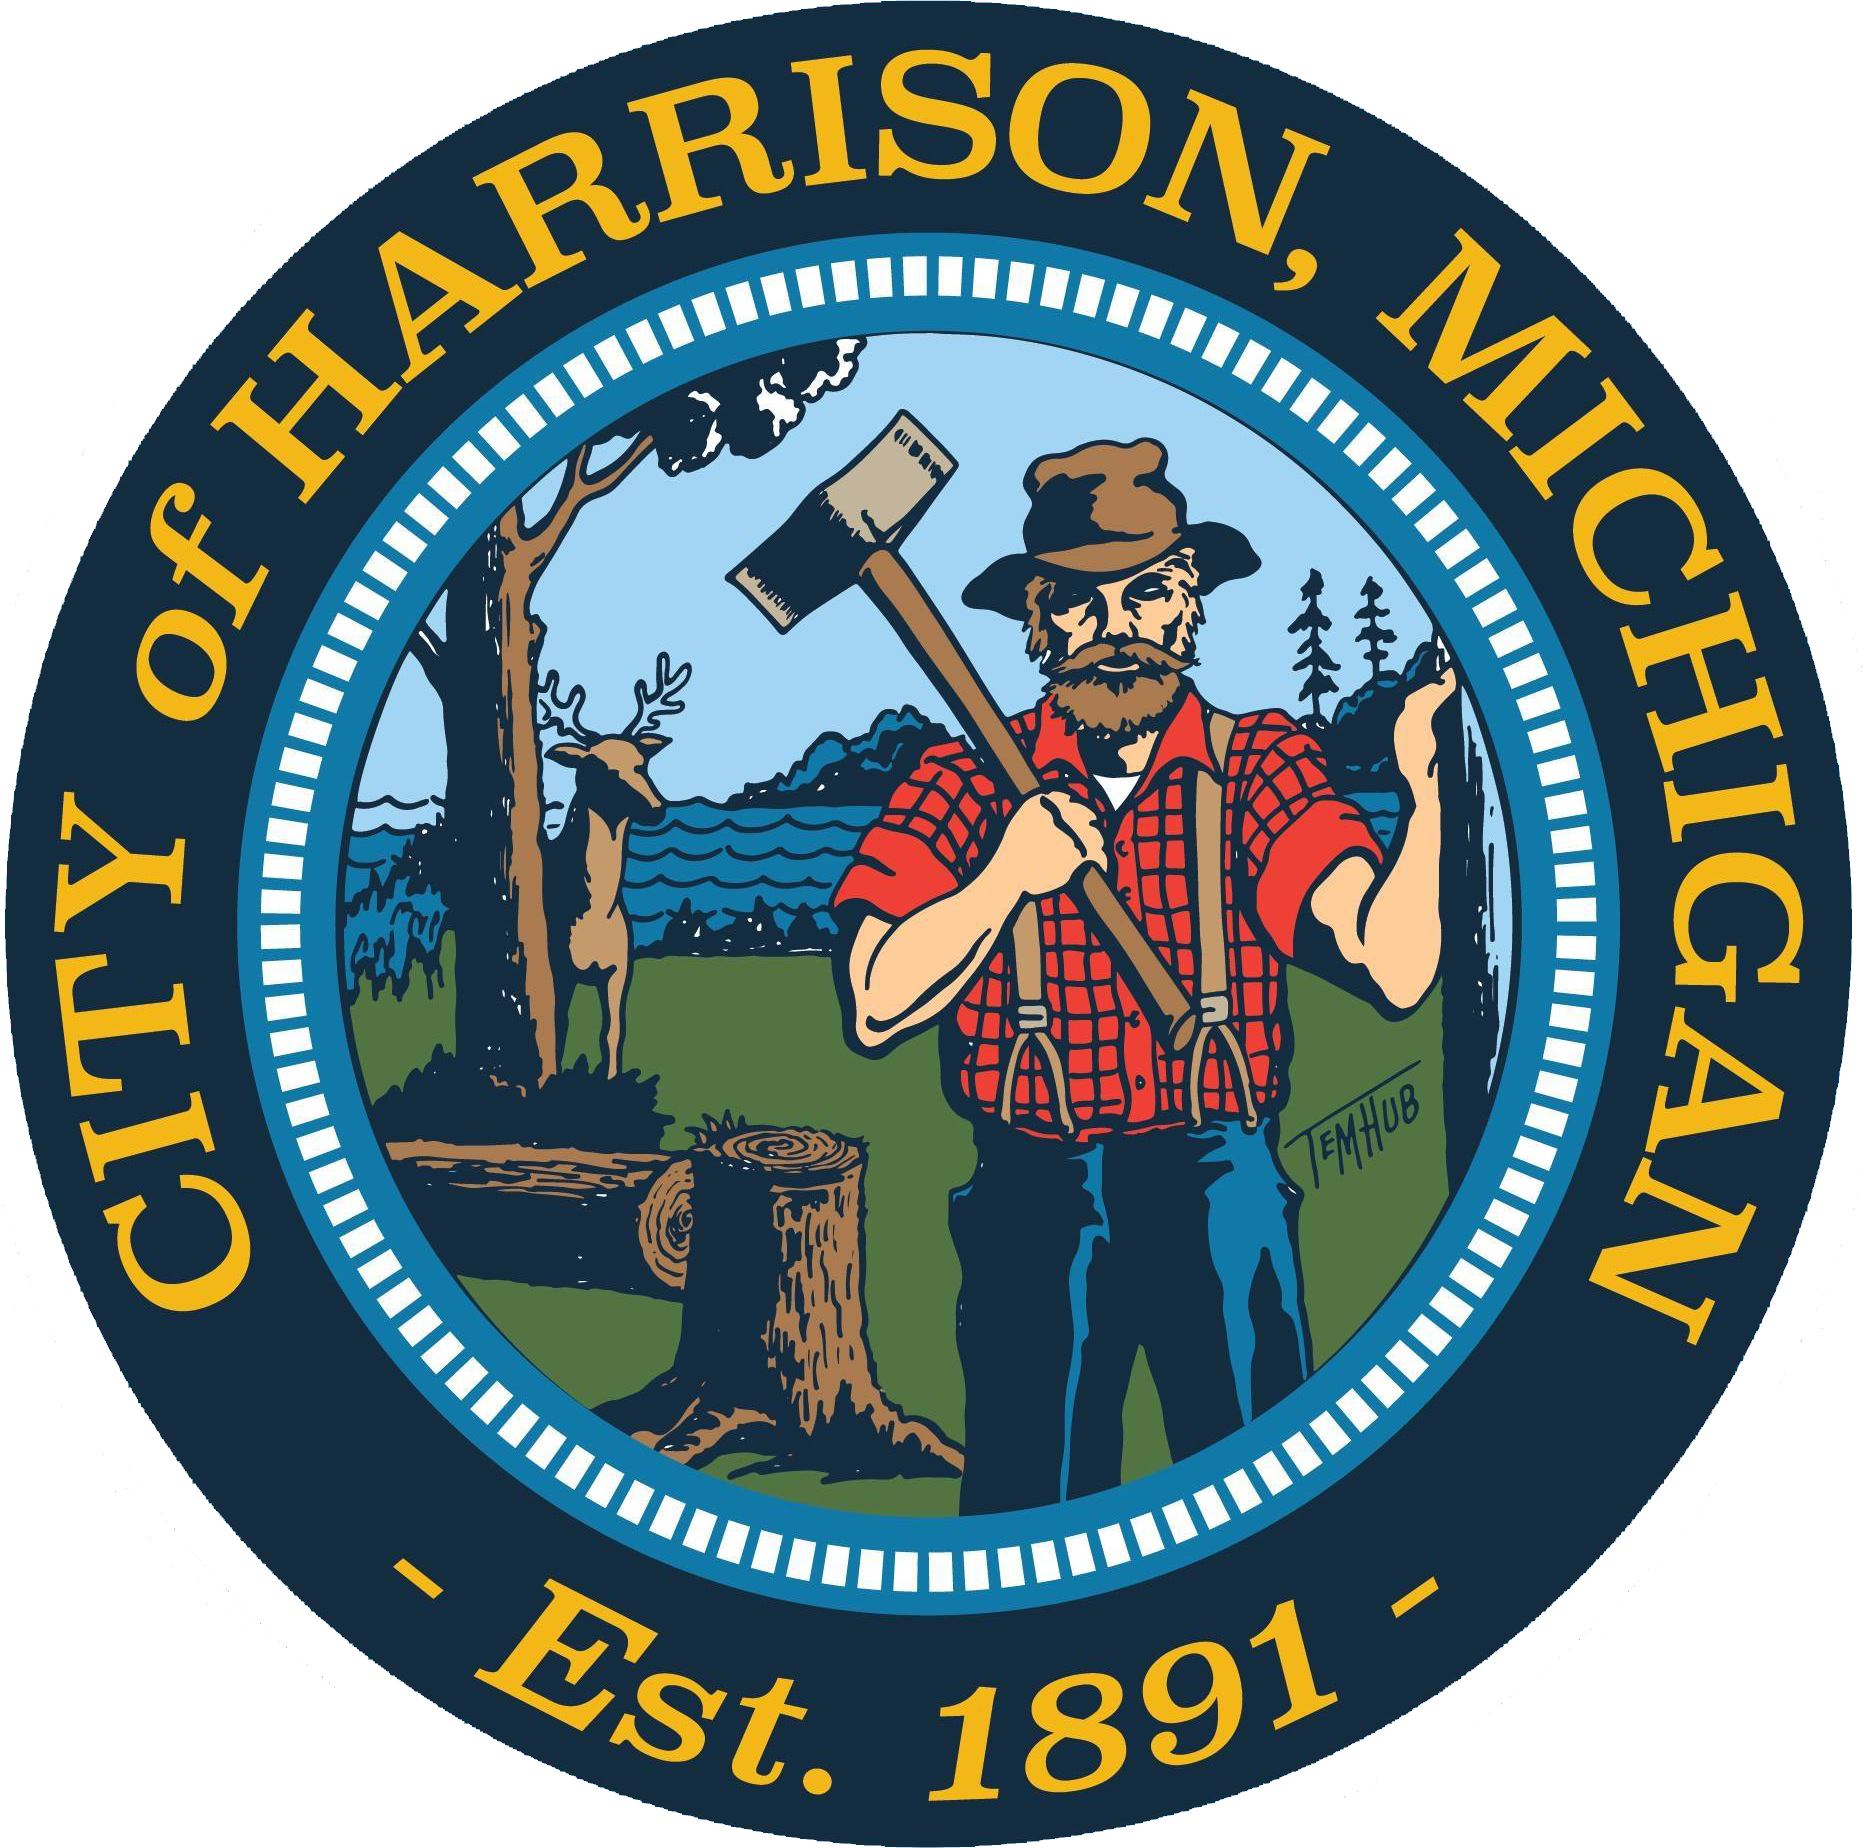 City of Harrison